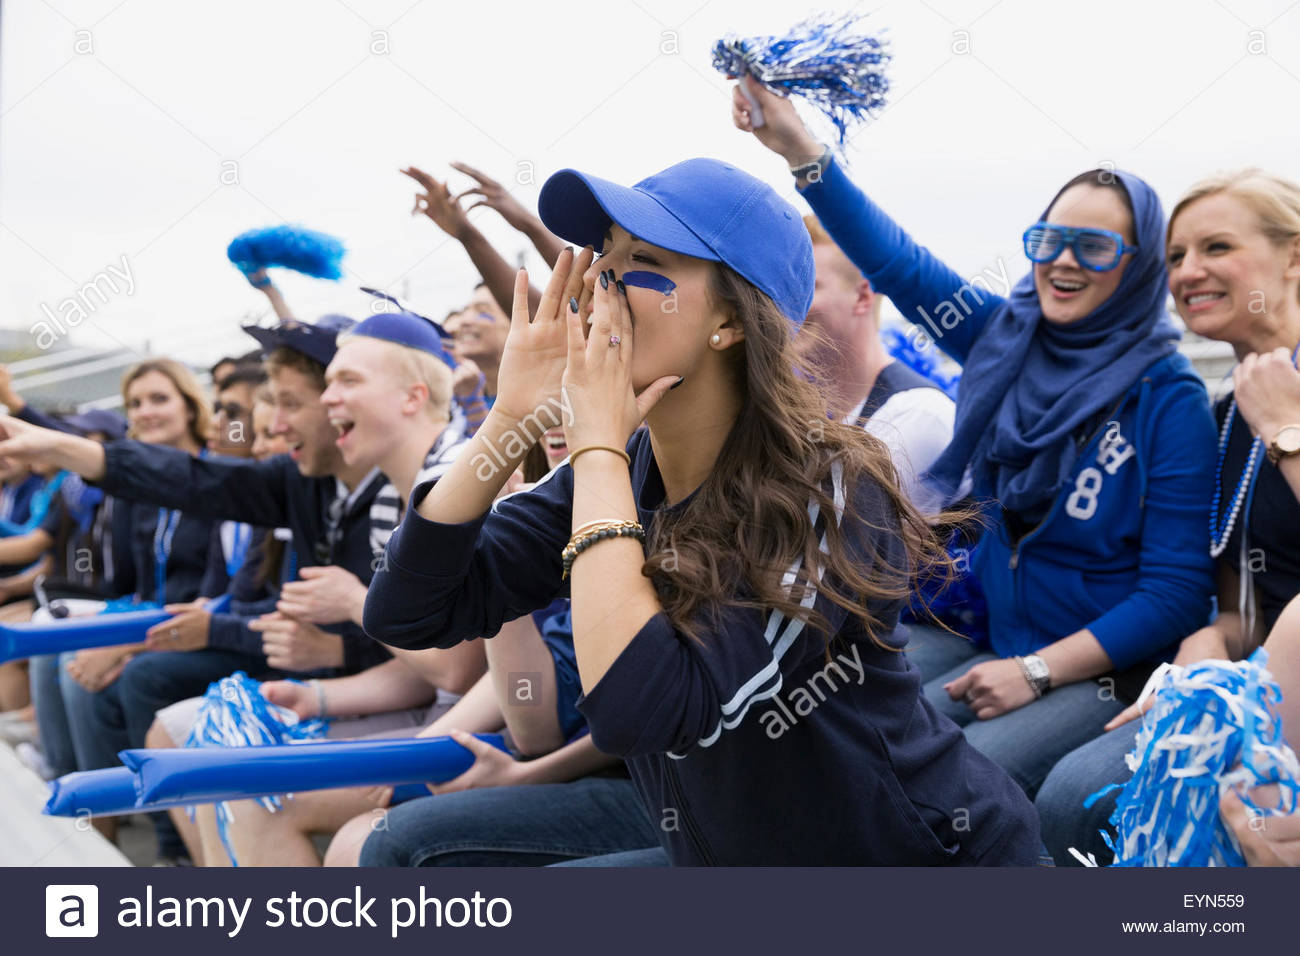 Fan in blue screaming from bleachers sports event Stock Photo